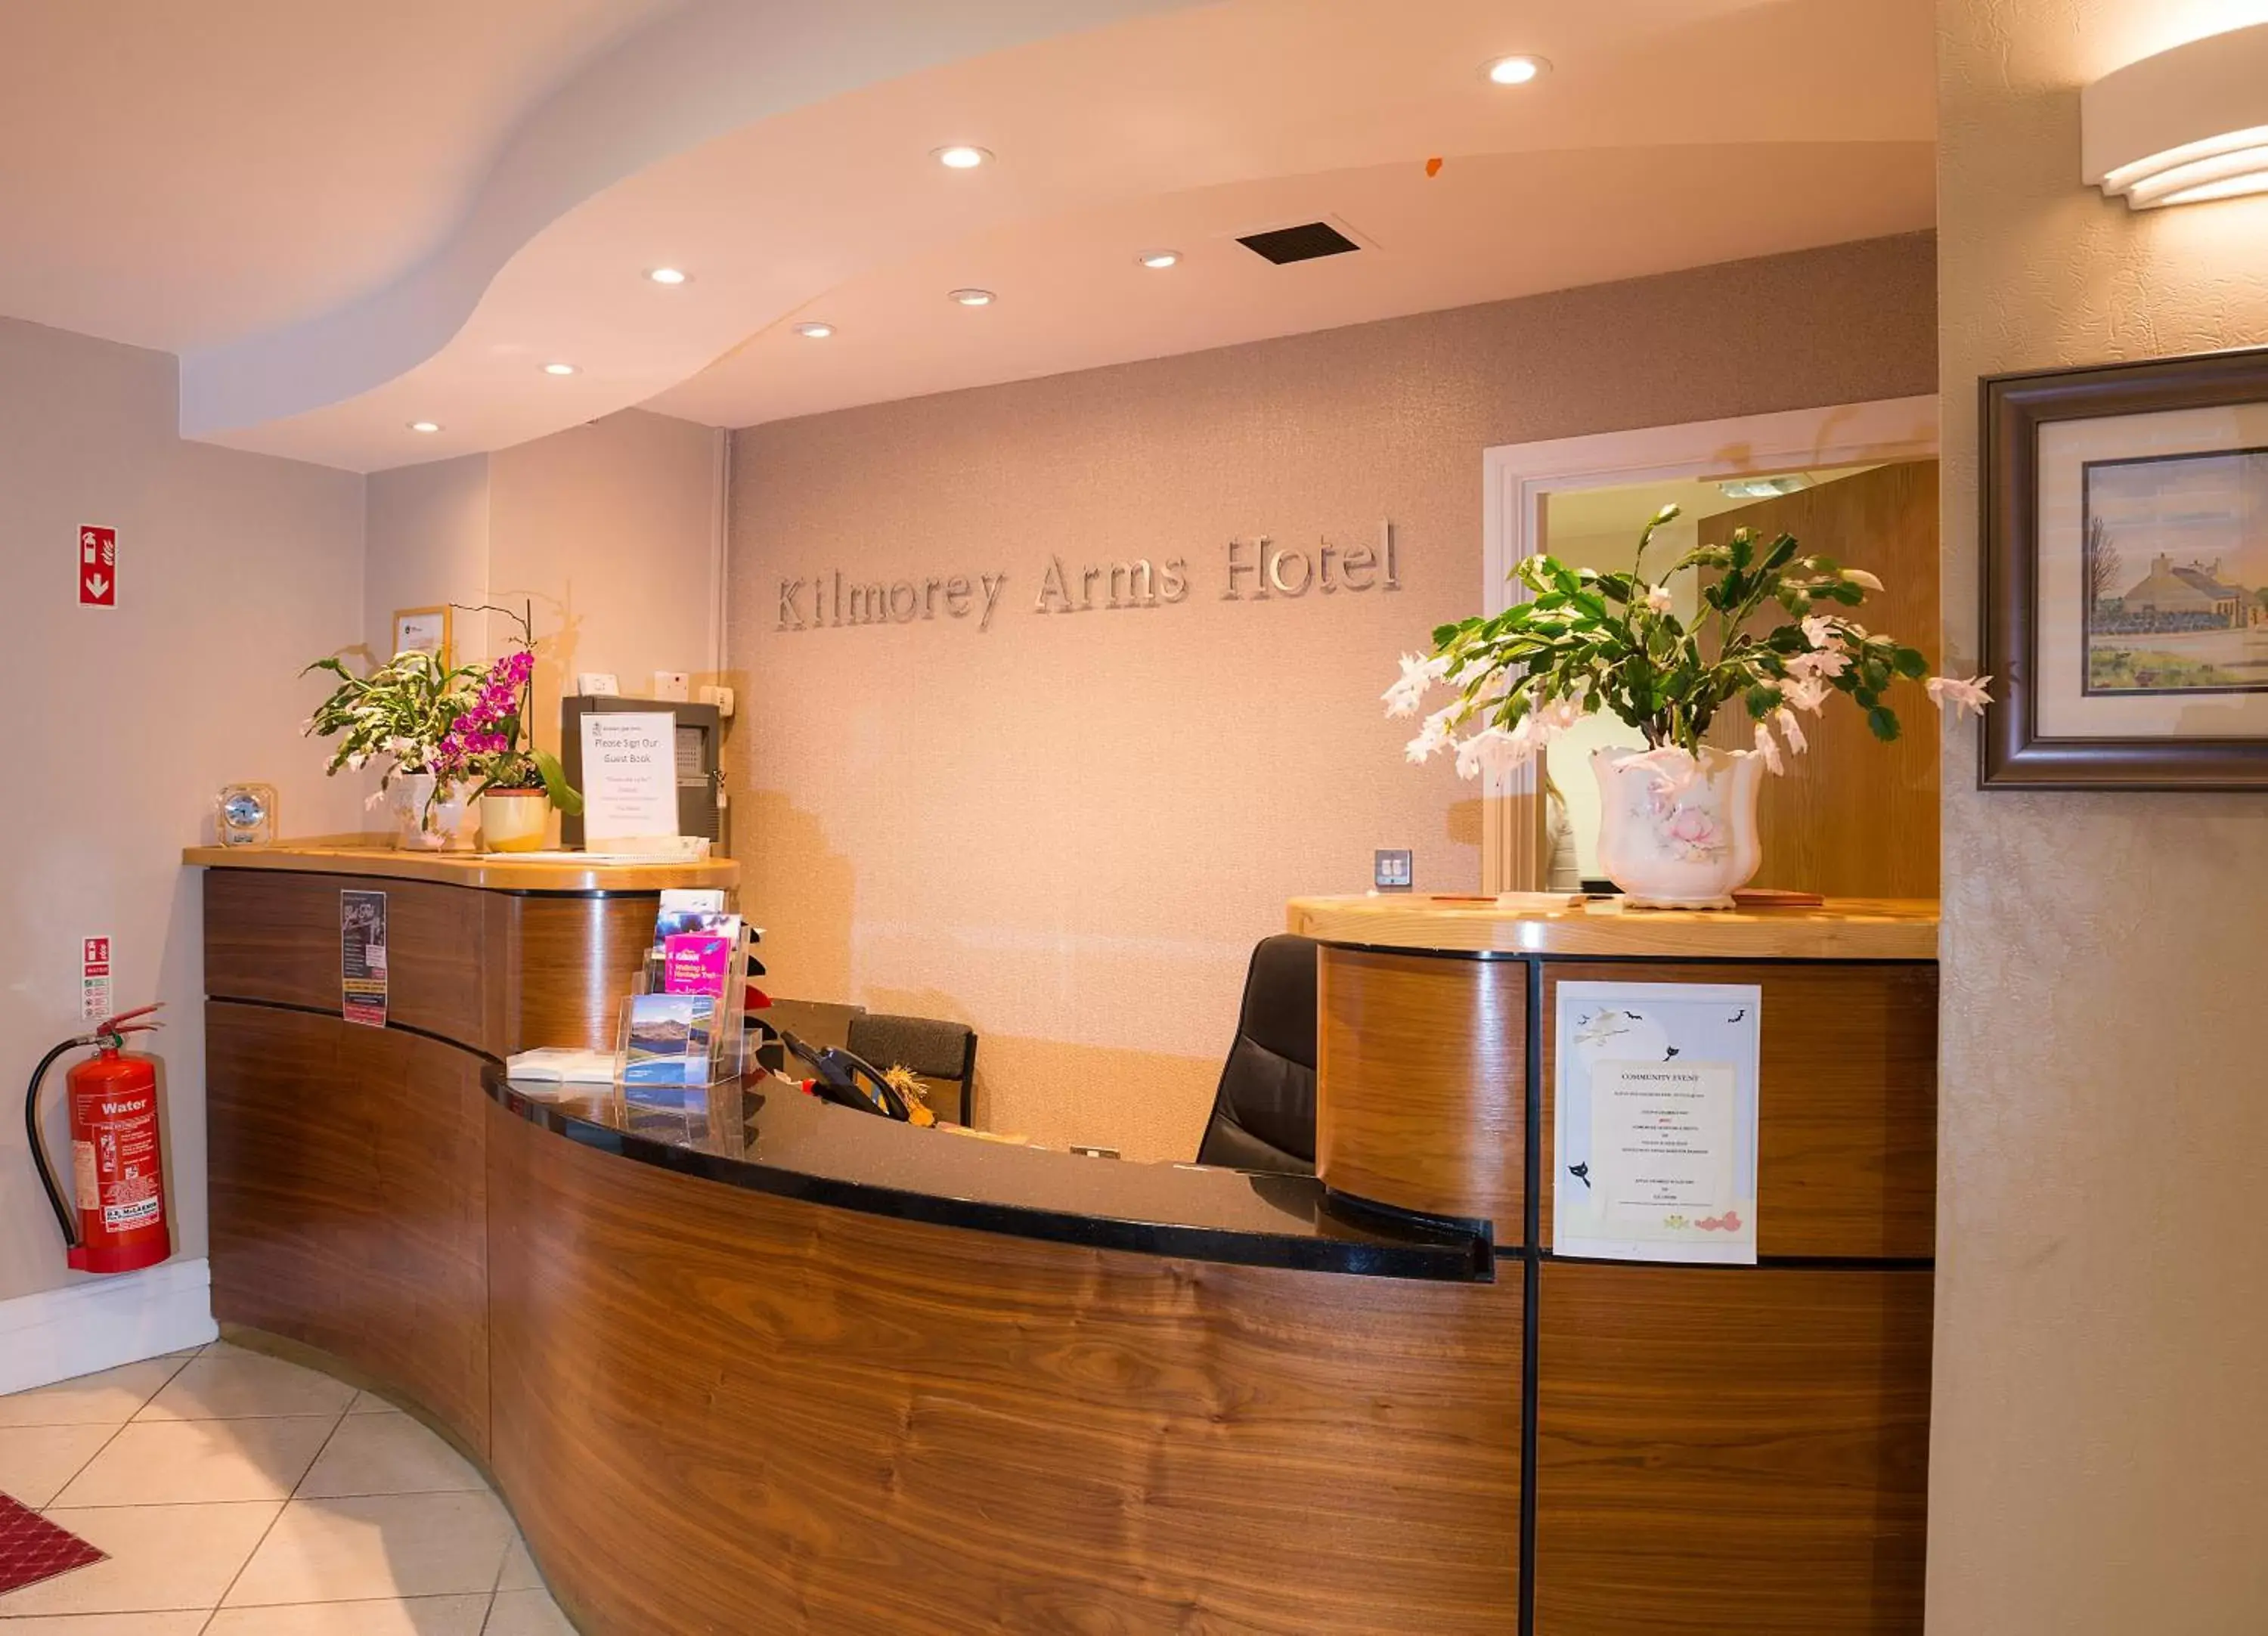 Lobby or reception, Lobby/Reception in Kilmorey Arms Hotel